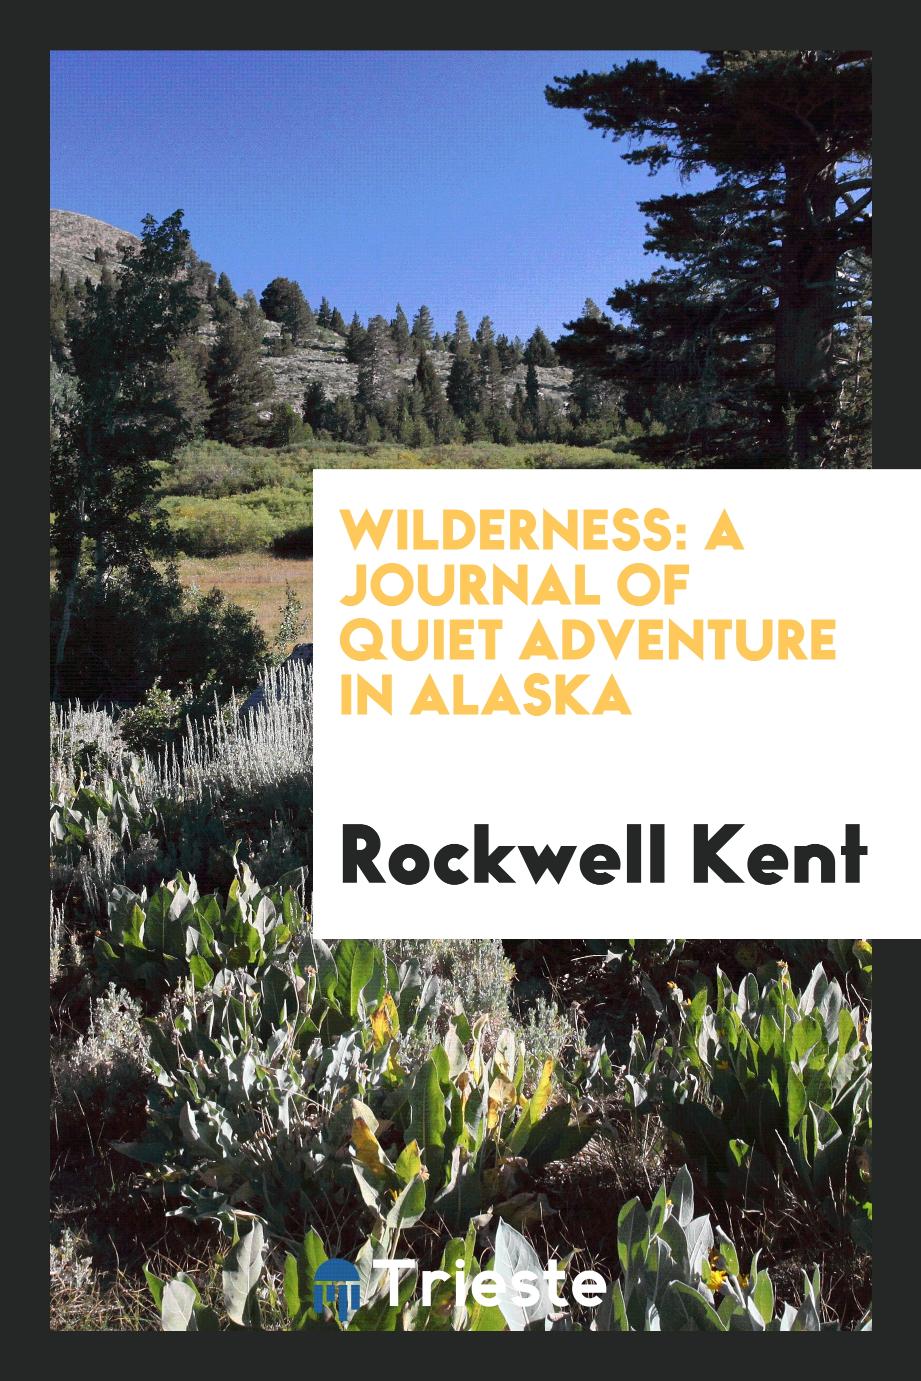 Wilderness: a journal of quiet adventure in Alaska